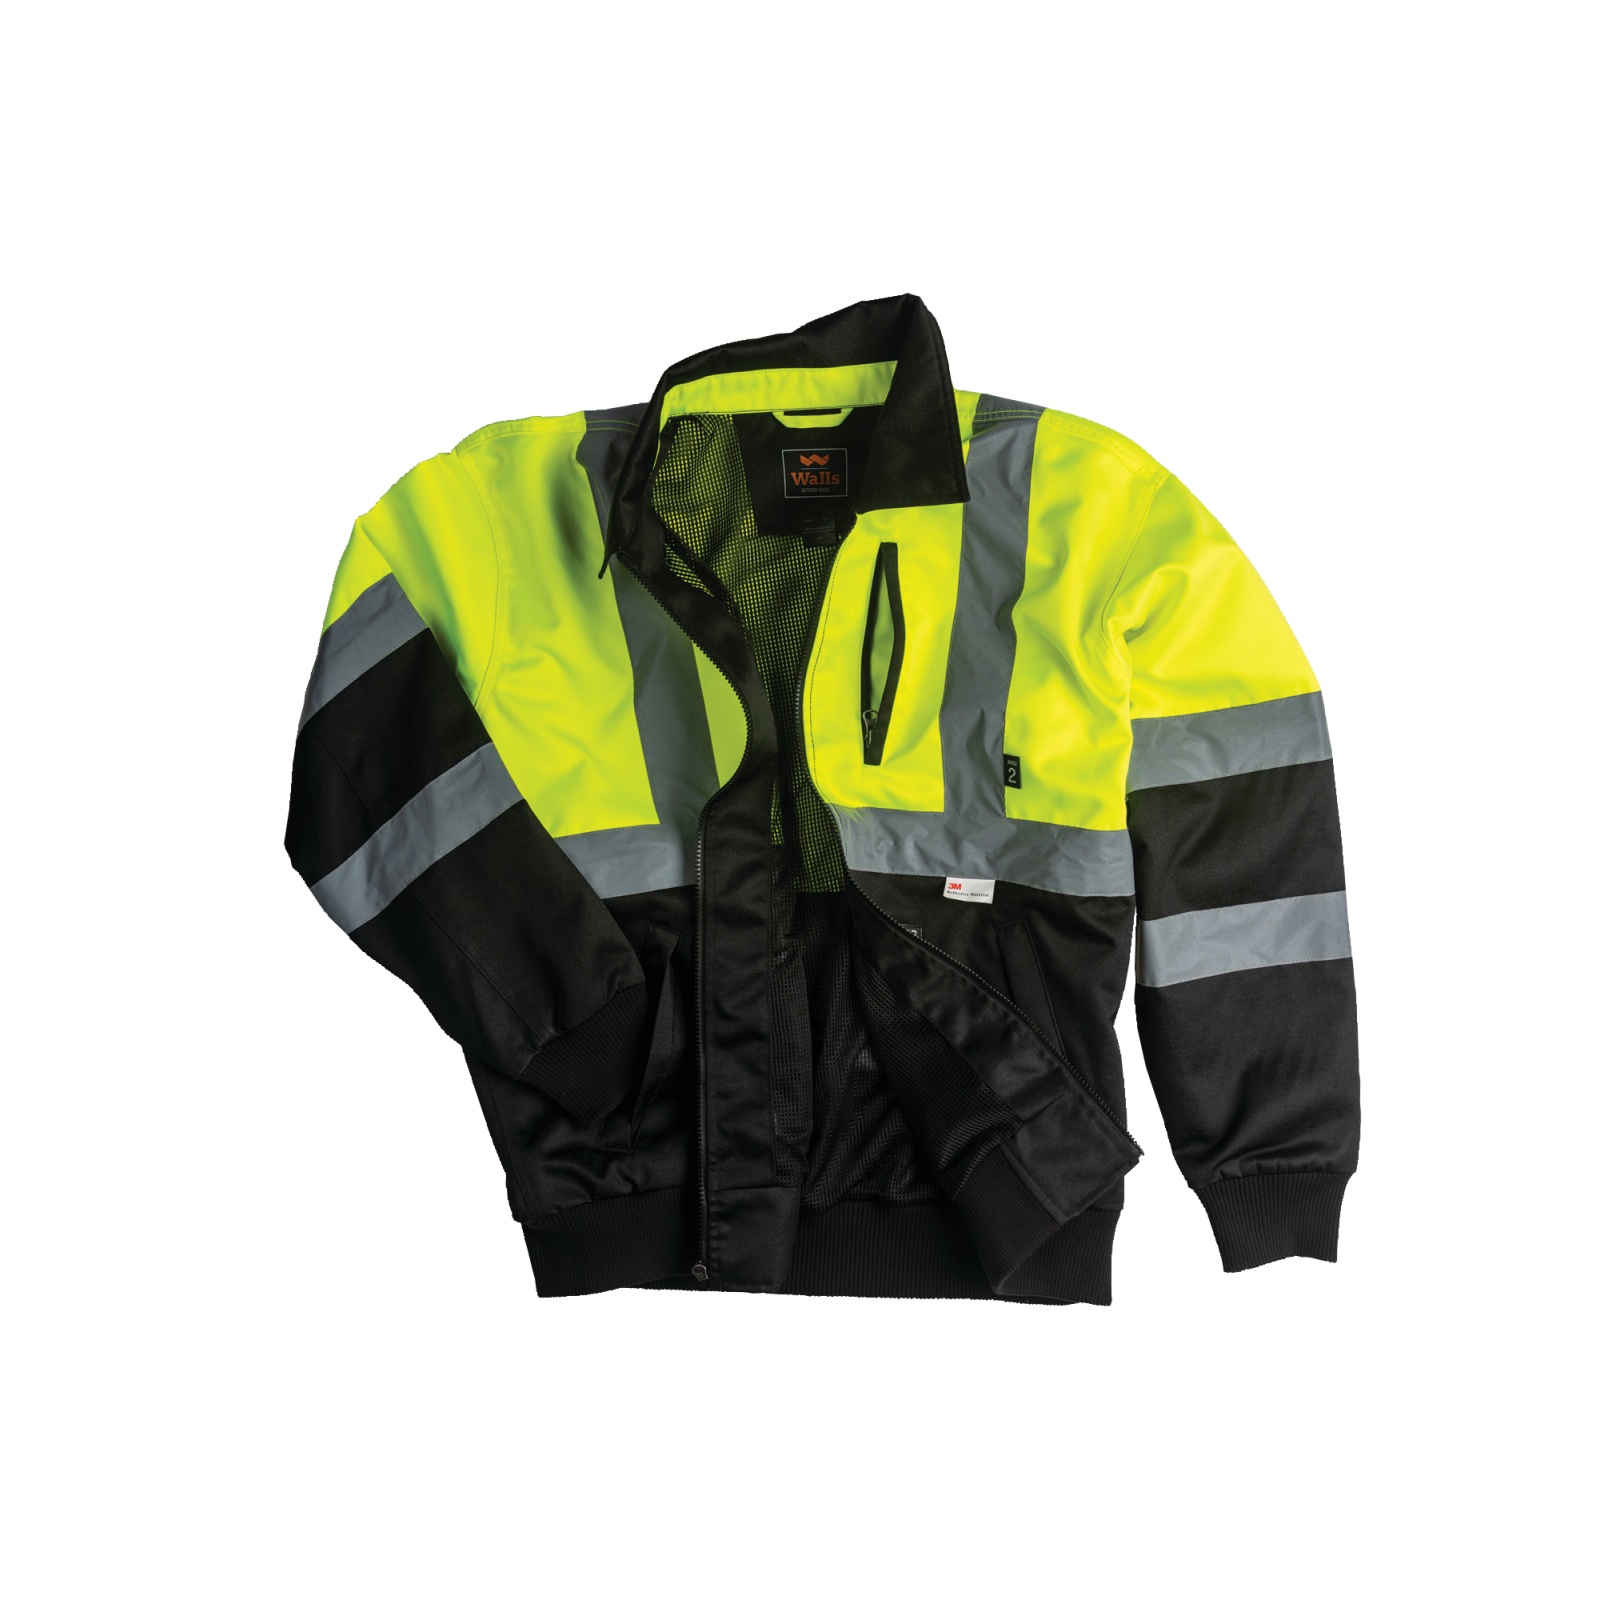 Hi-Vis Insulated Safety Segmented Reflective Jacket Coat Road Work  JORESTECH | eBay